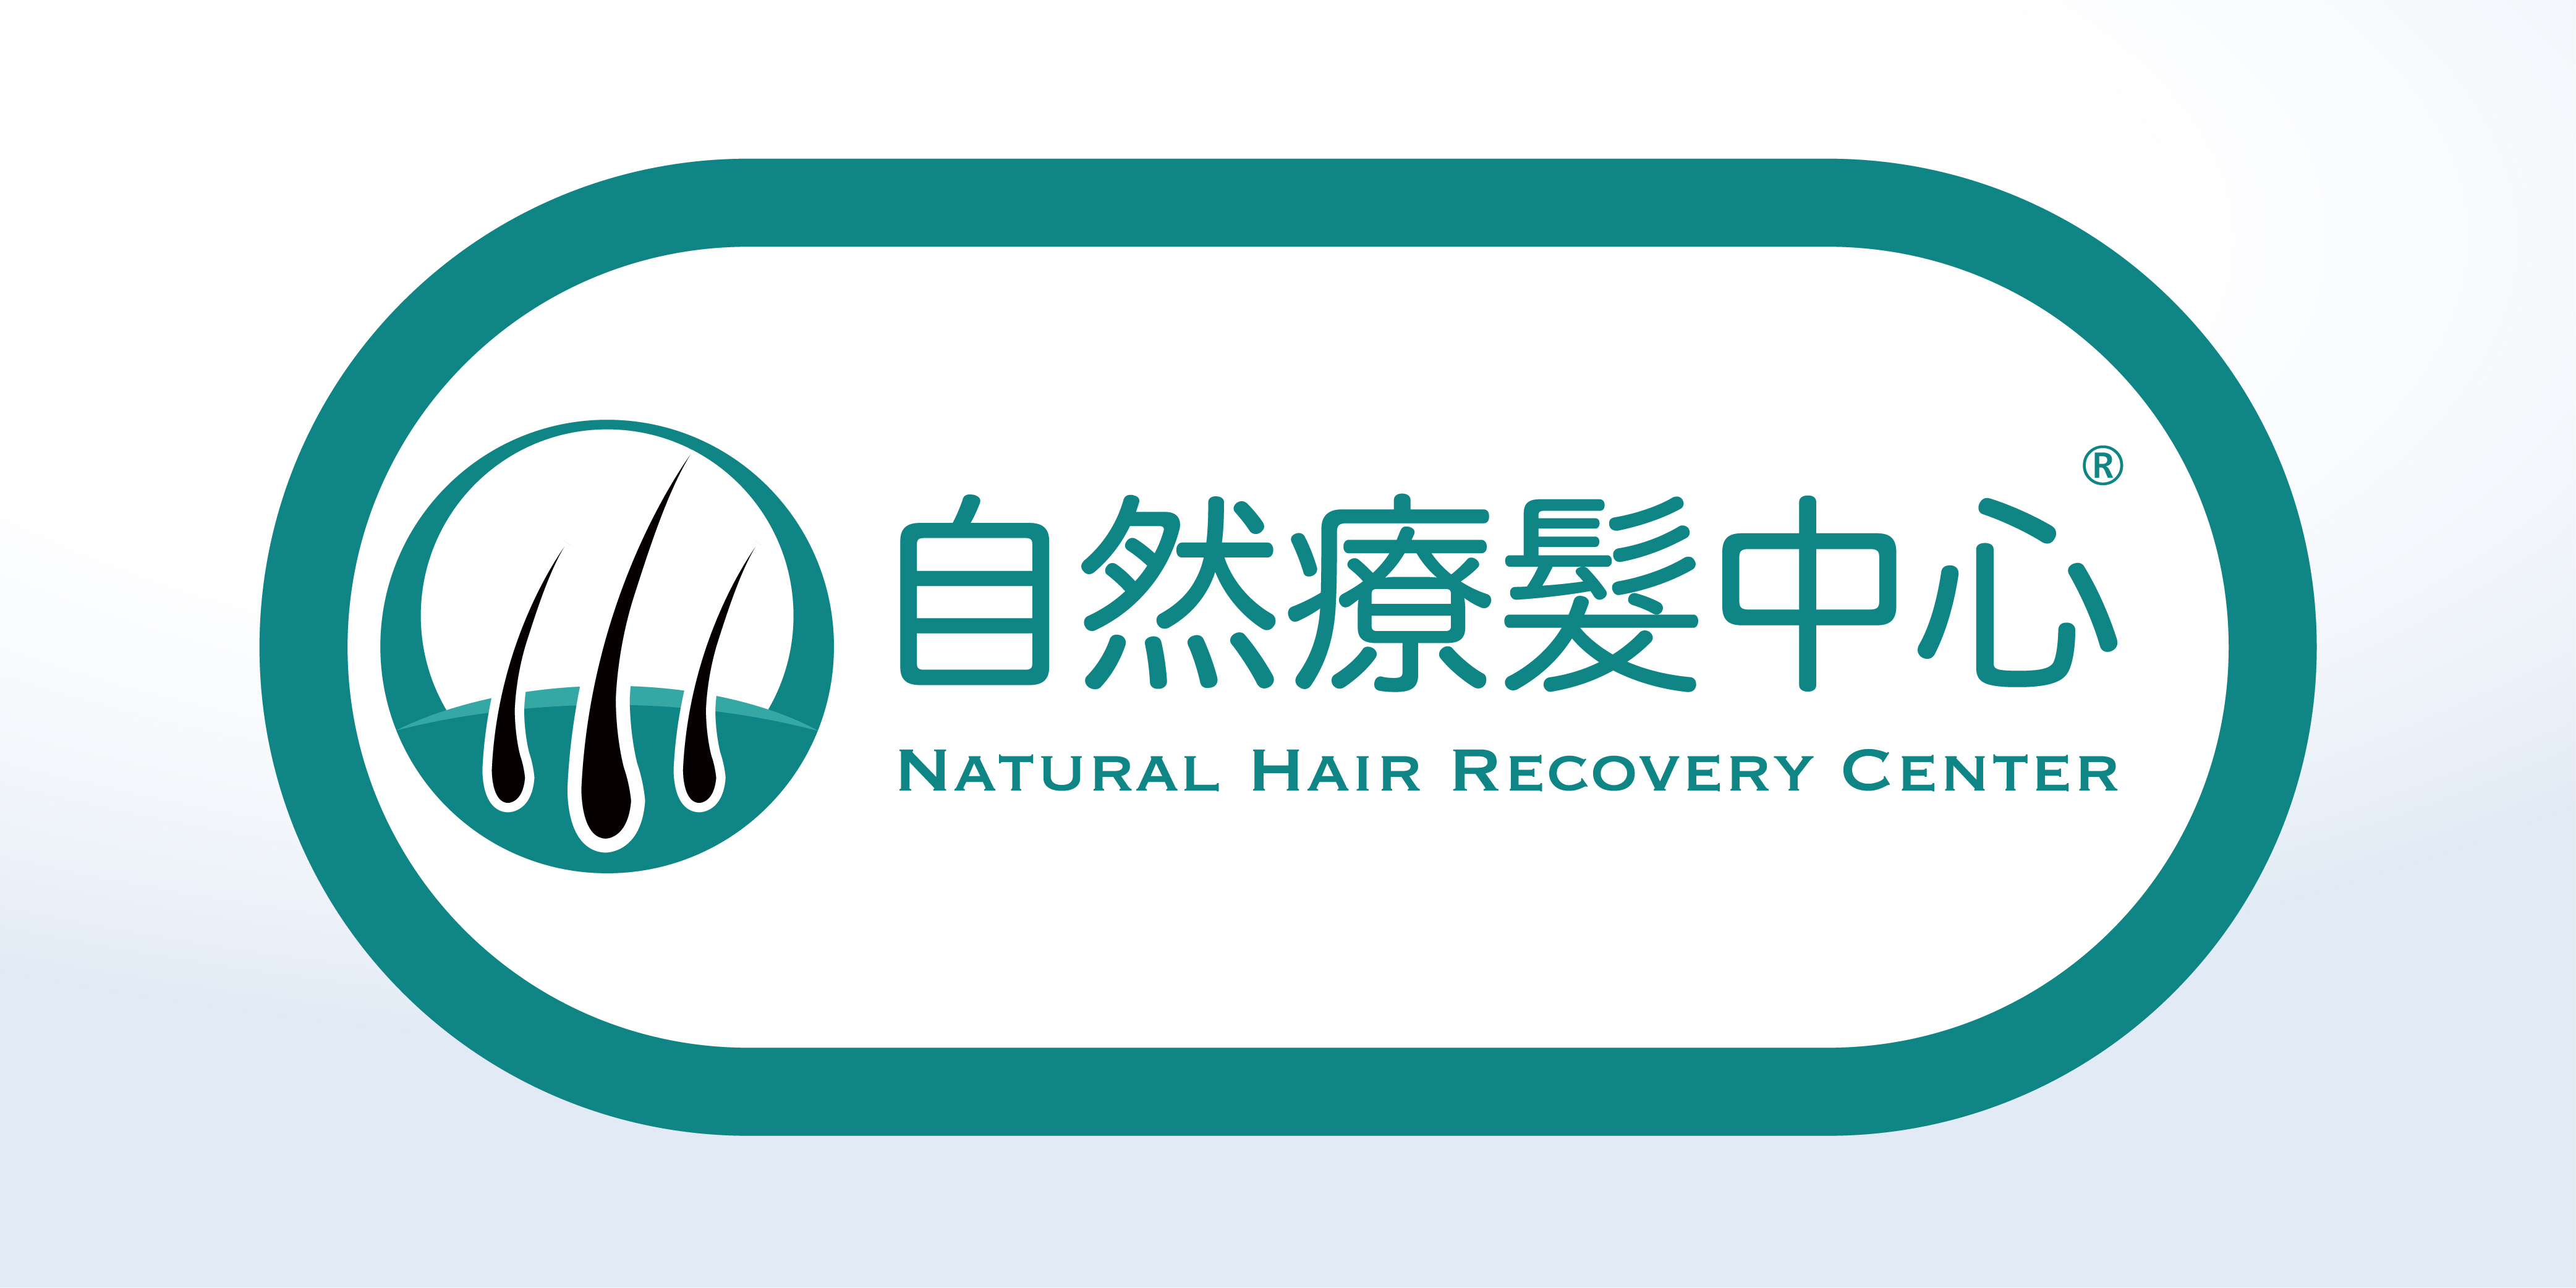 植发/驳发: 自然療髮中心 Natural Hair Recovery Center ®